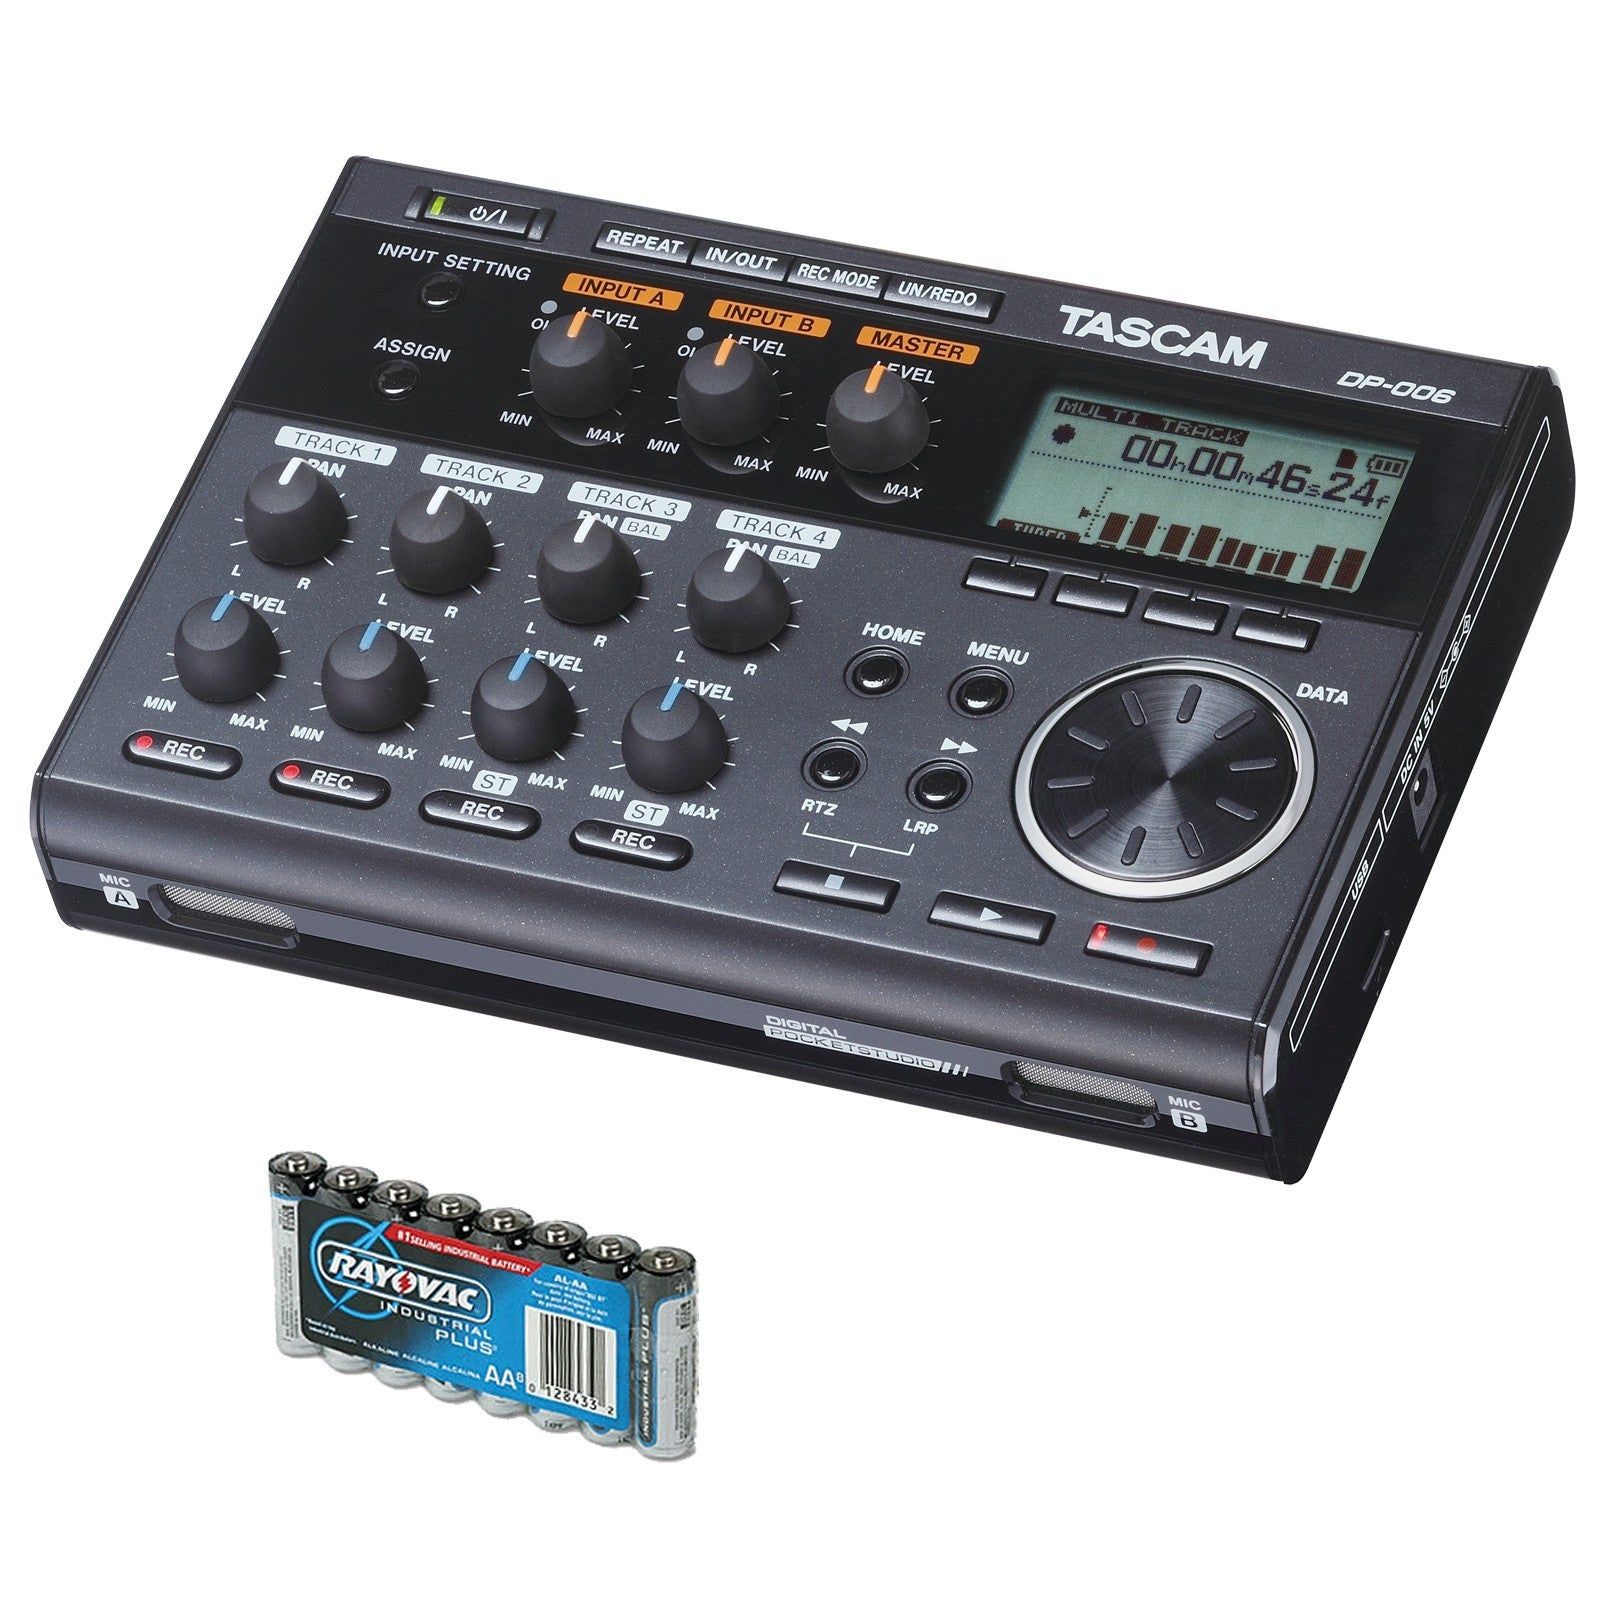 TASCAM DP-006 Pocketstudio Multitrack Recorder BONUS PAK